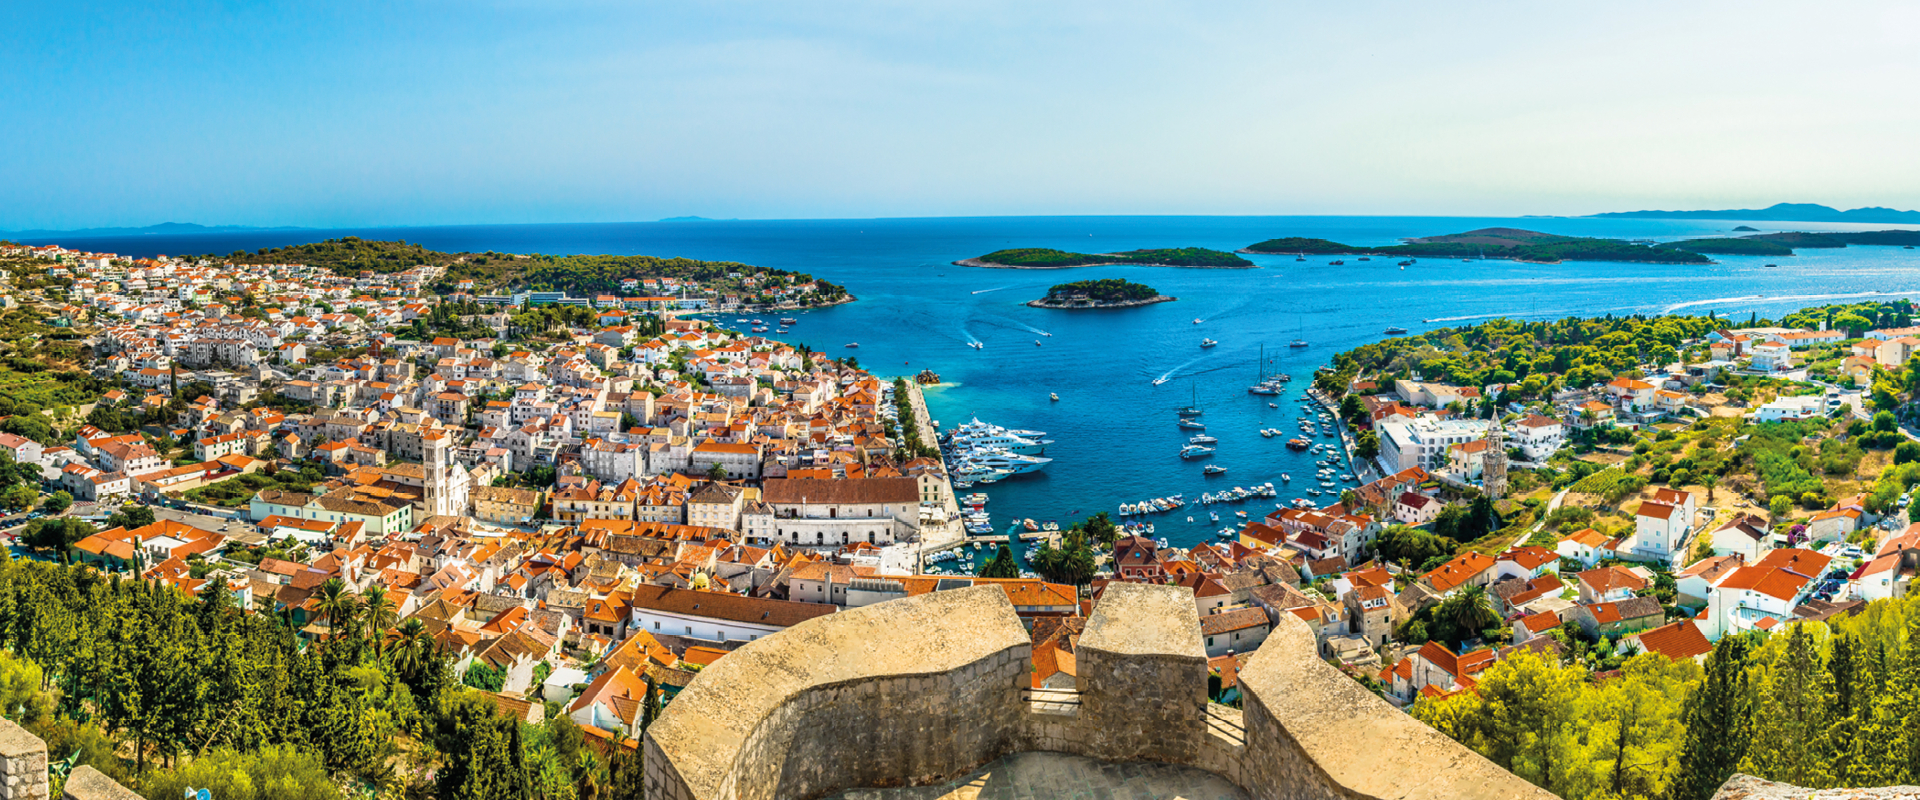 The Islands of Dalmatia Cruise 2019 (Start Dubrovnik, End